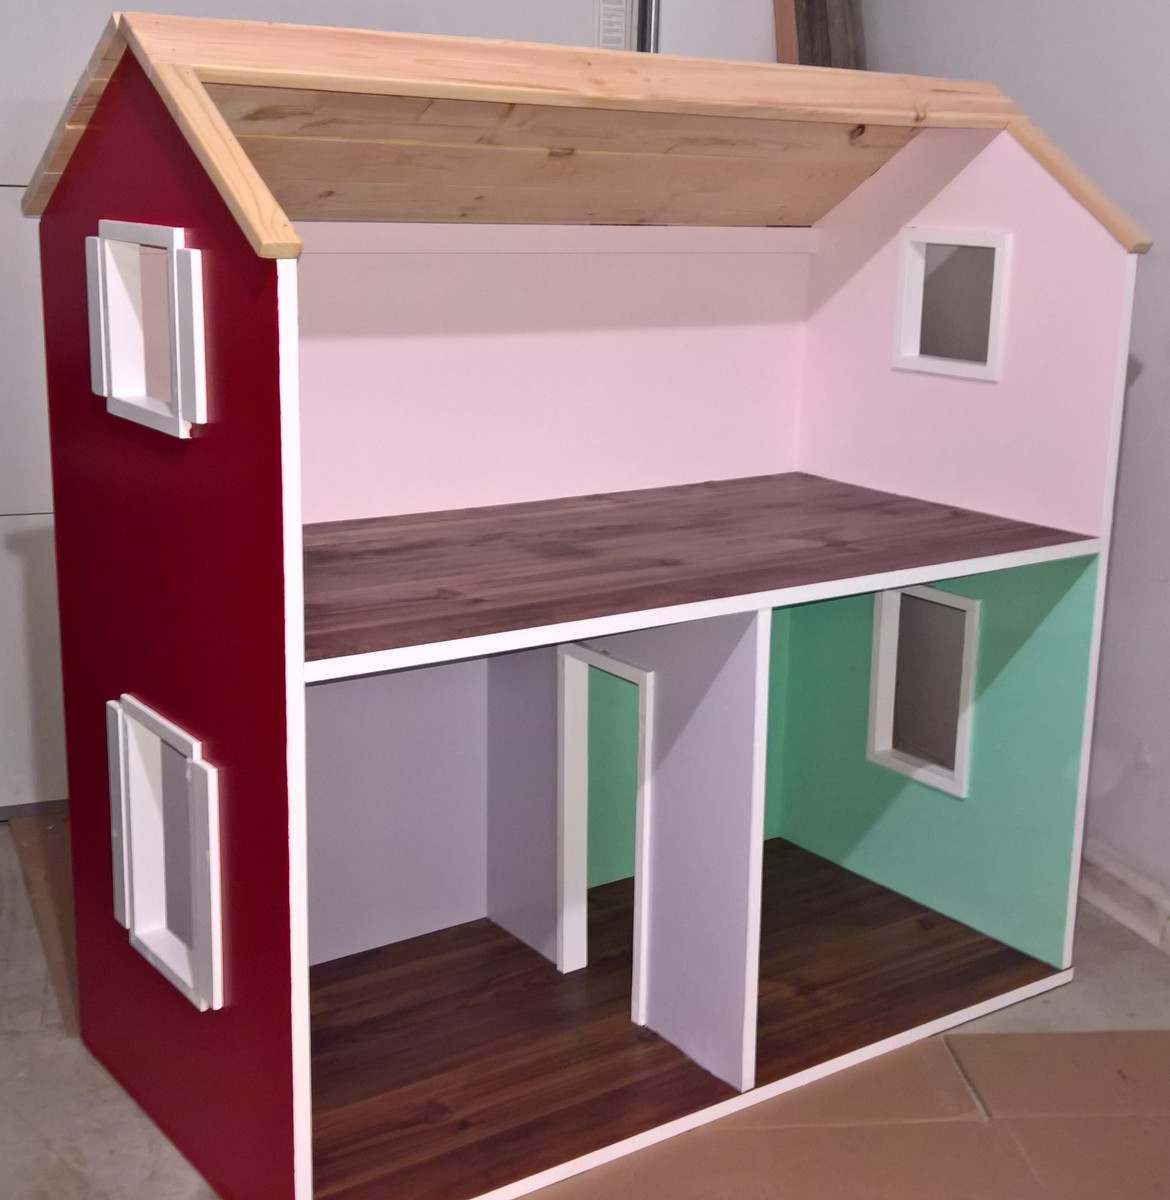 2 story dollhouse